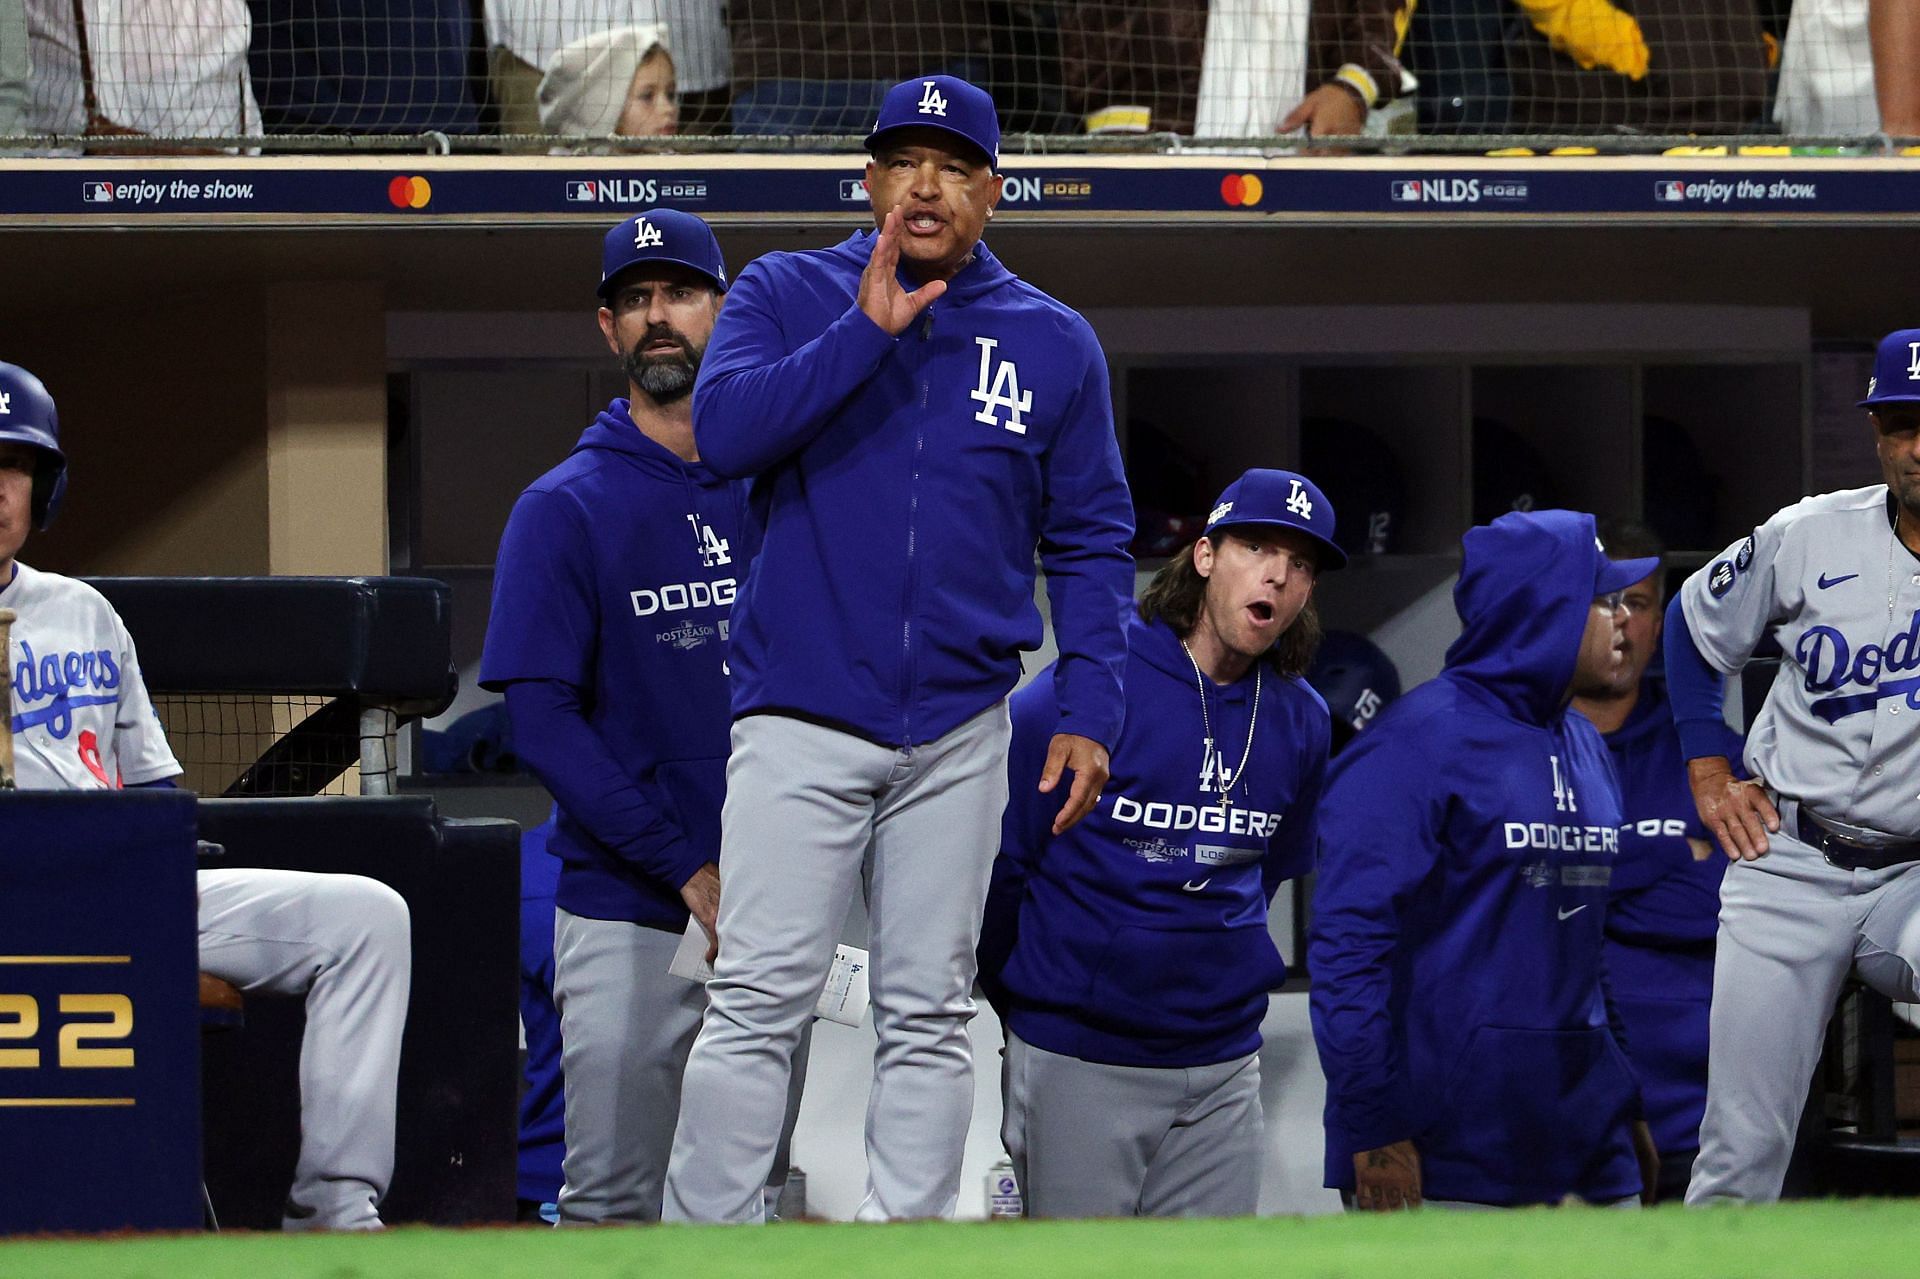 LITTLE LEAGUE BASEBALL: Rockies defeat Dodgers to win BD single A playoffs